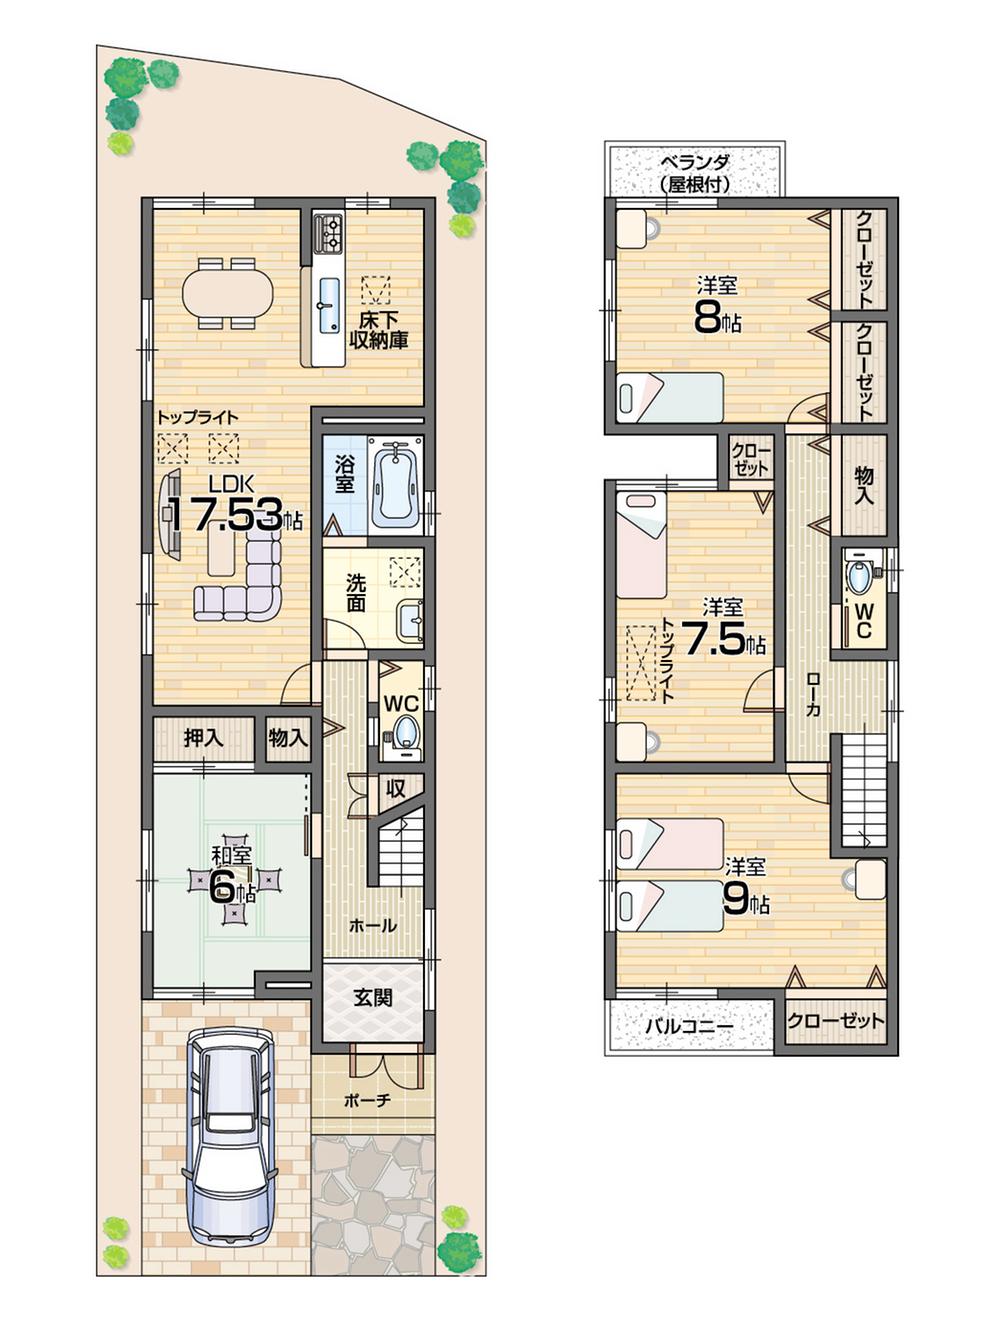 Floor plan. (No. 8 locations), Price 28.8 million yen, 4LDK, Land area 104.57 sq m , Building area 115.02 sq m